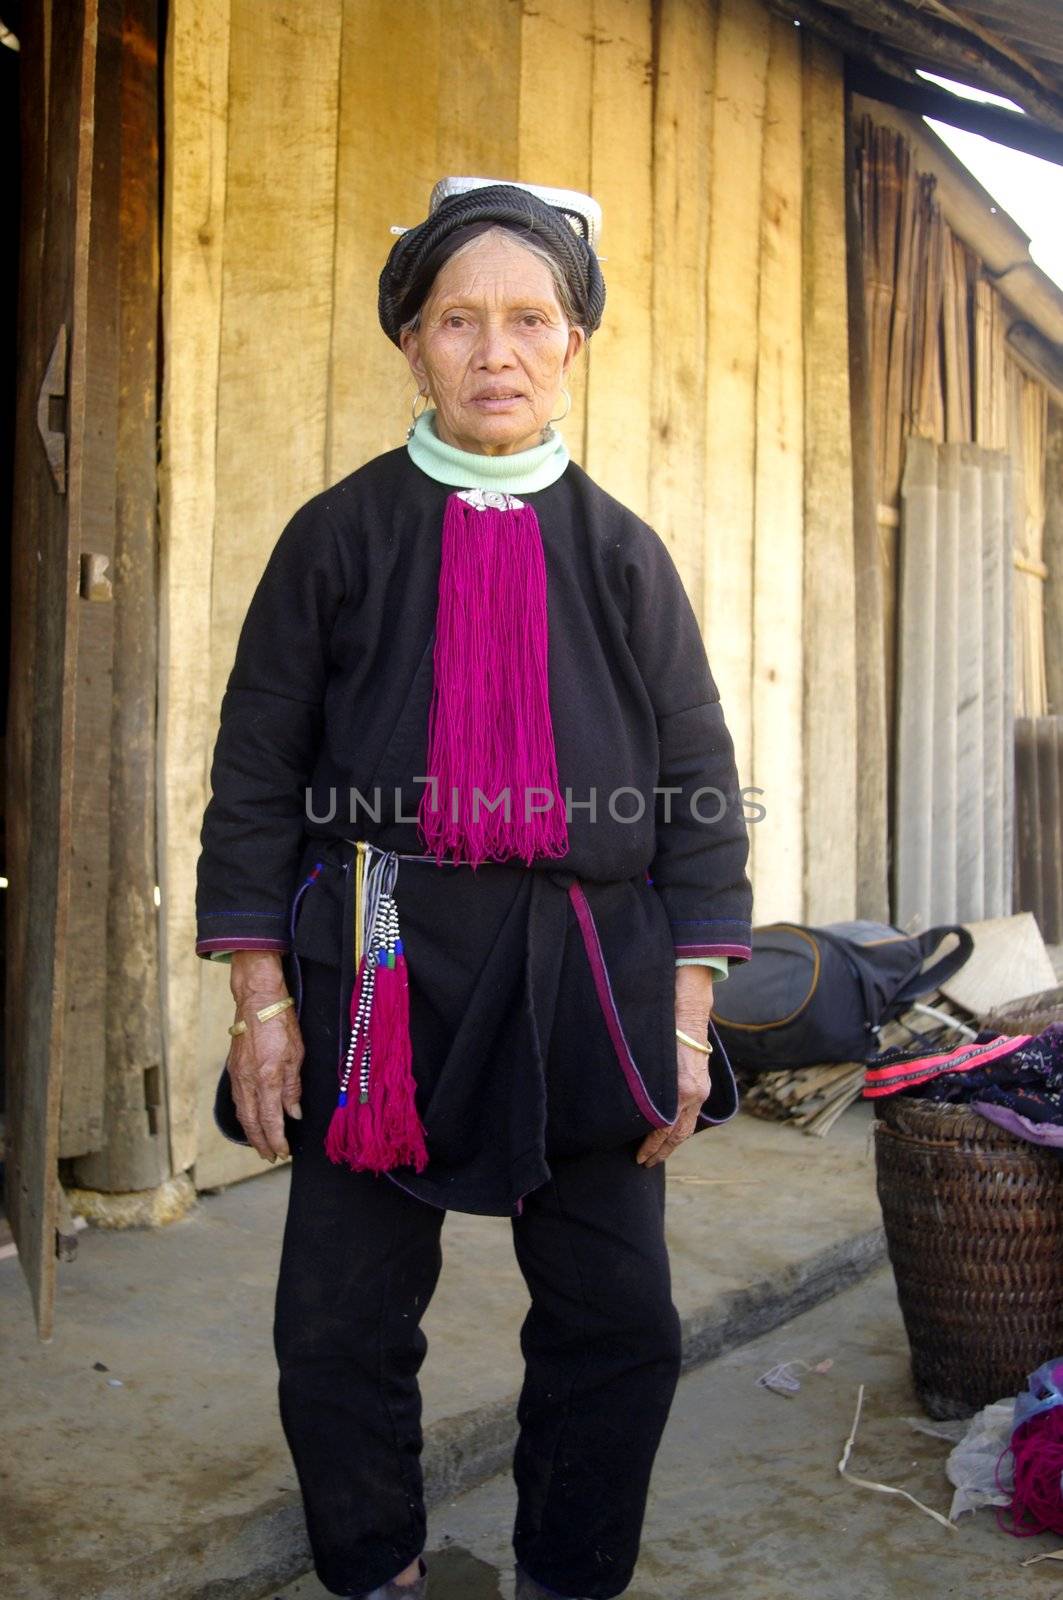 Grandma Black Dao "Tien" by Duroc